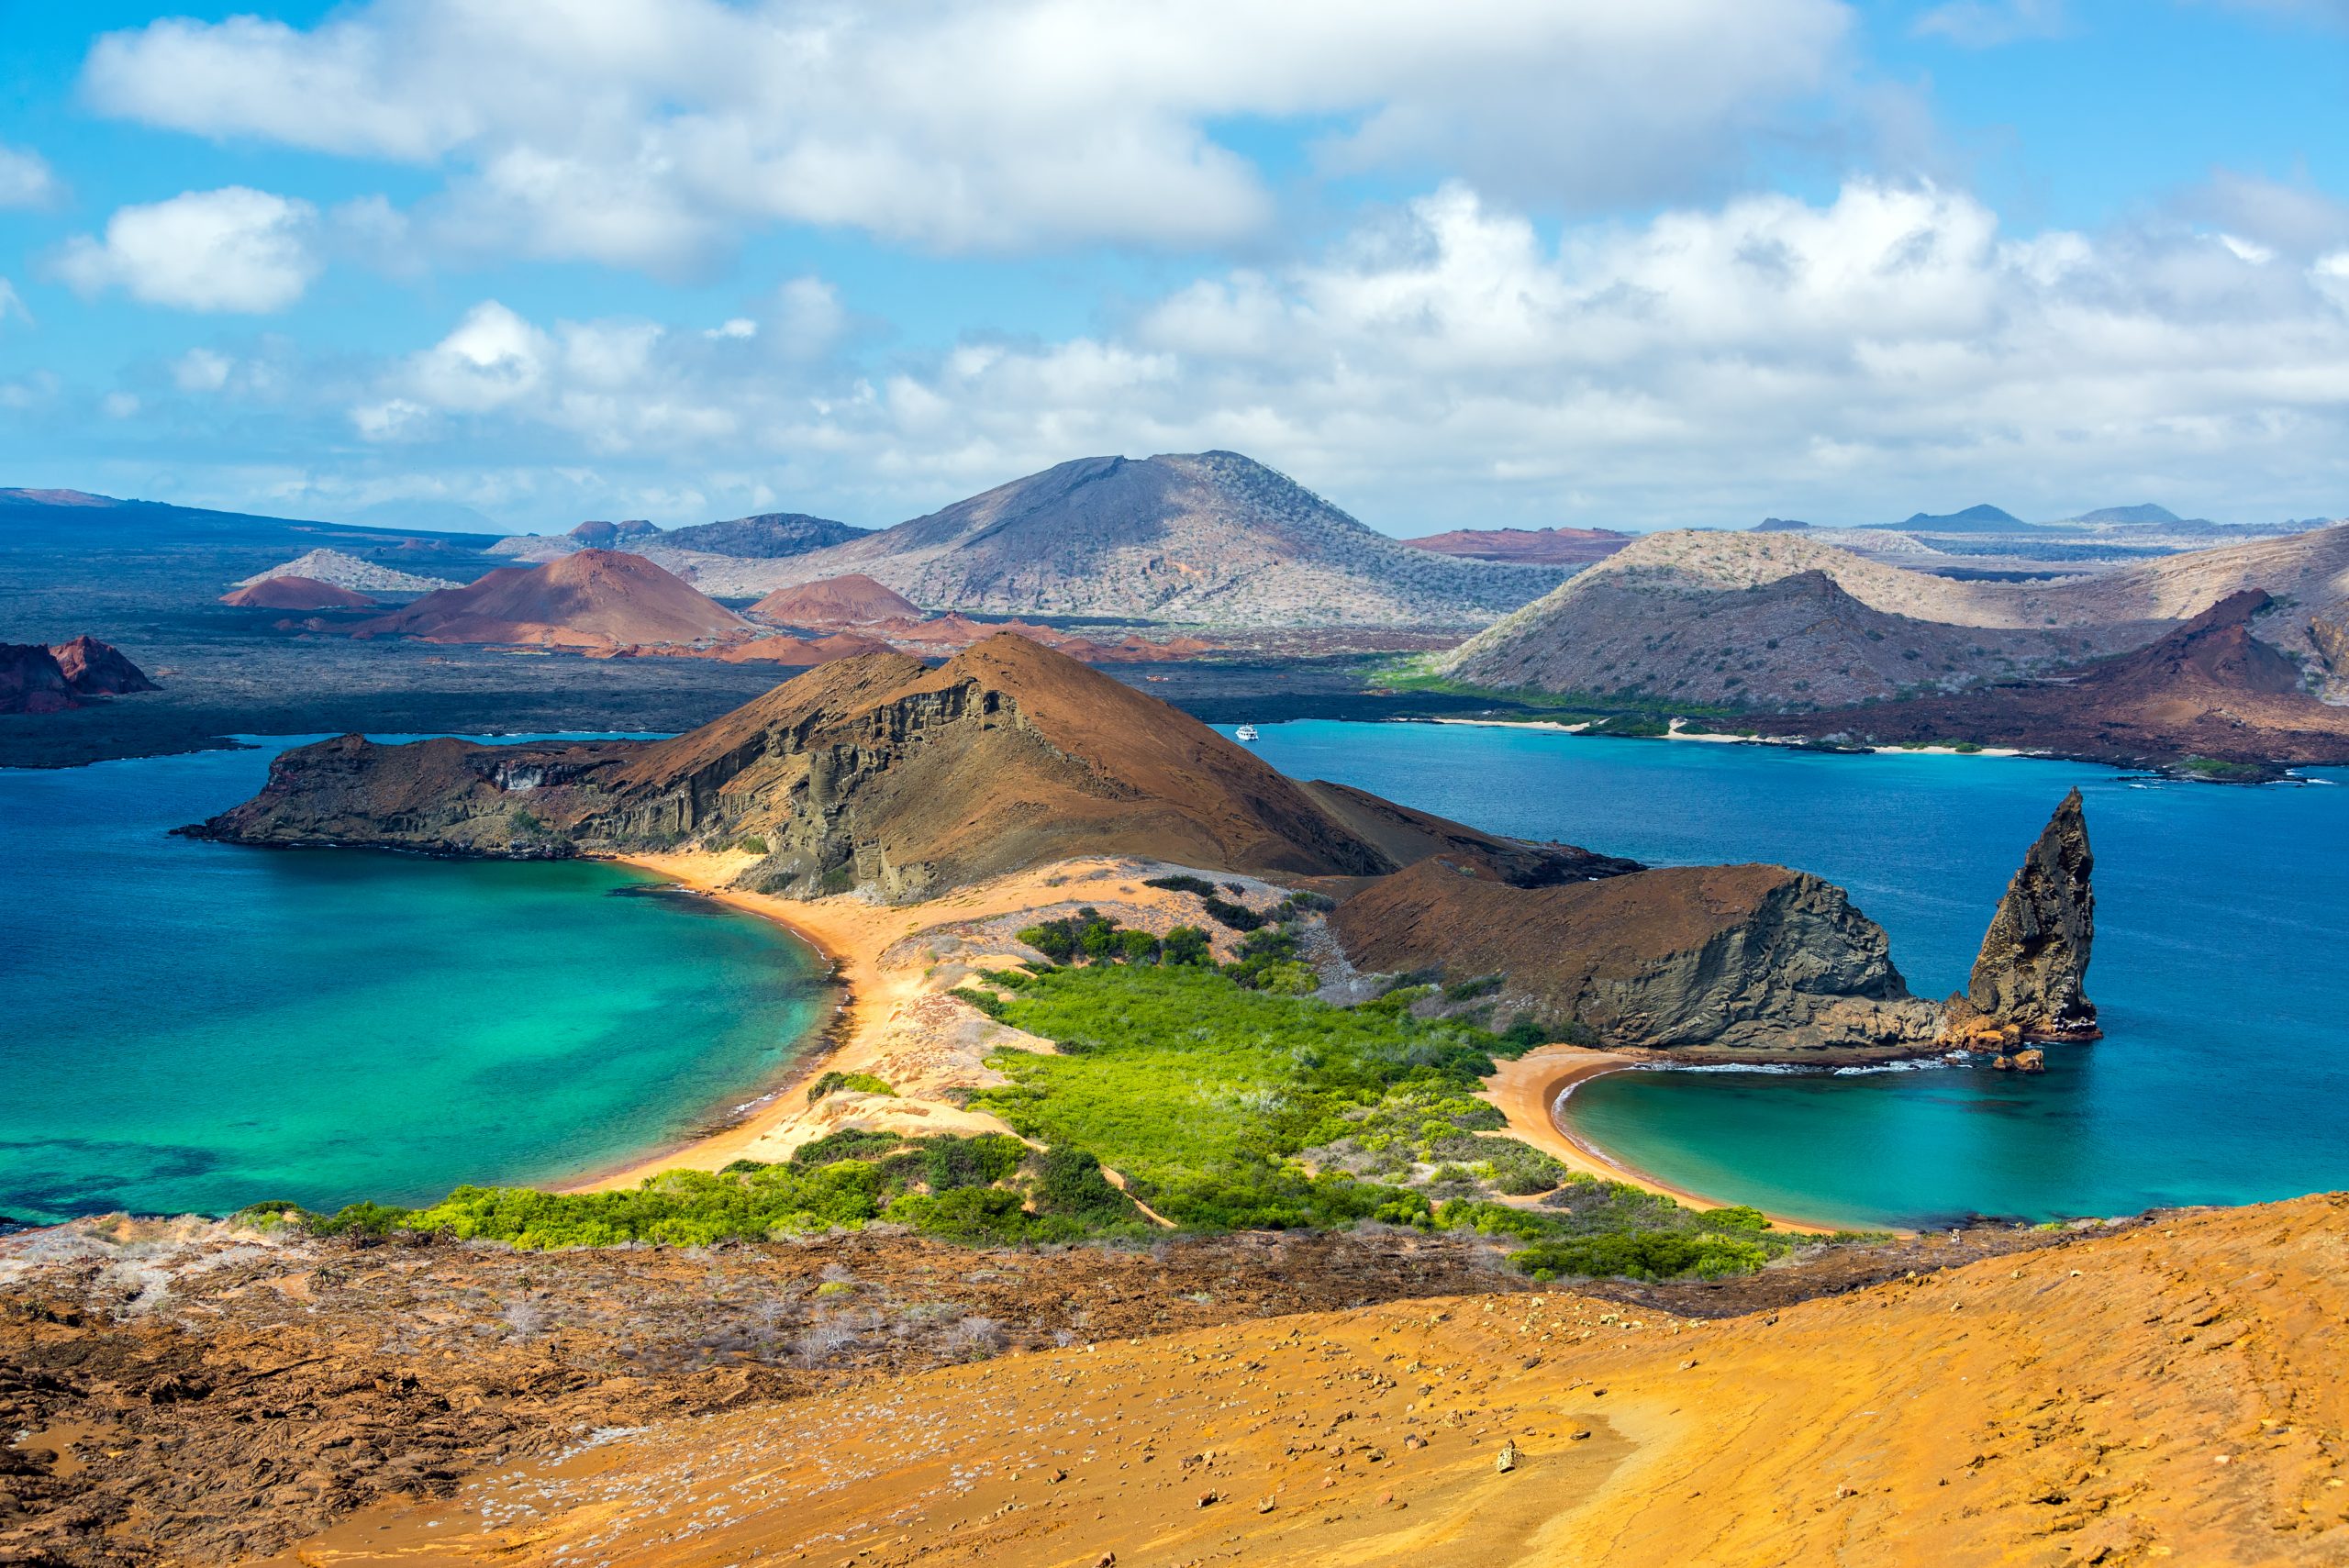 Finish your ride in Ecuador with Galápagos Islands